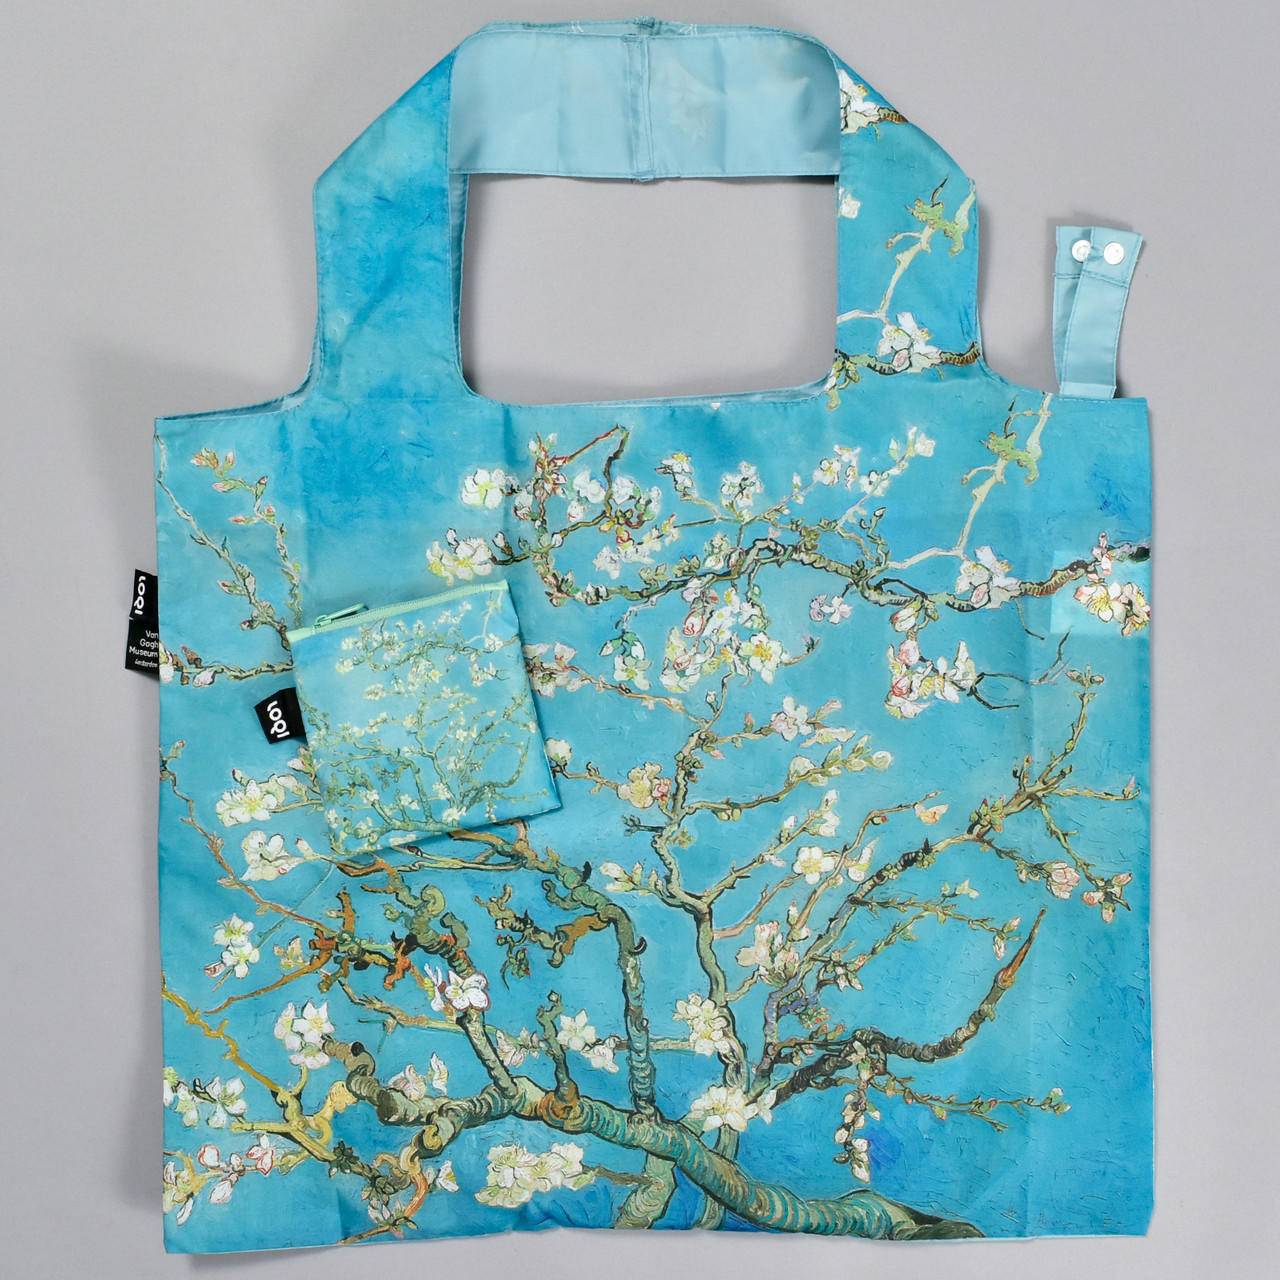 LOQI Bag Vincent Van Gogh, The Starry Night